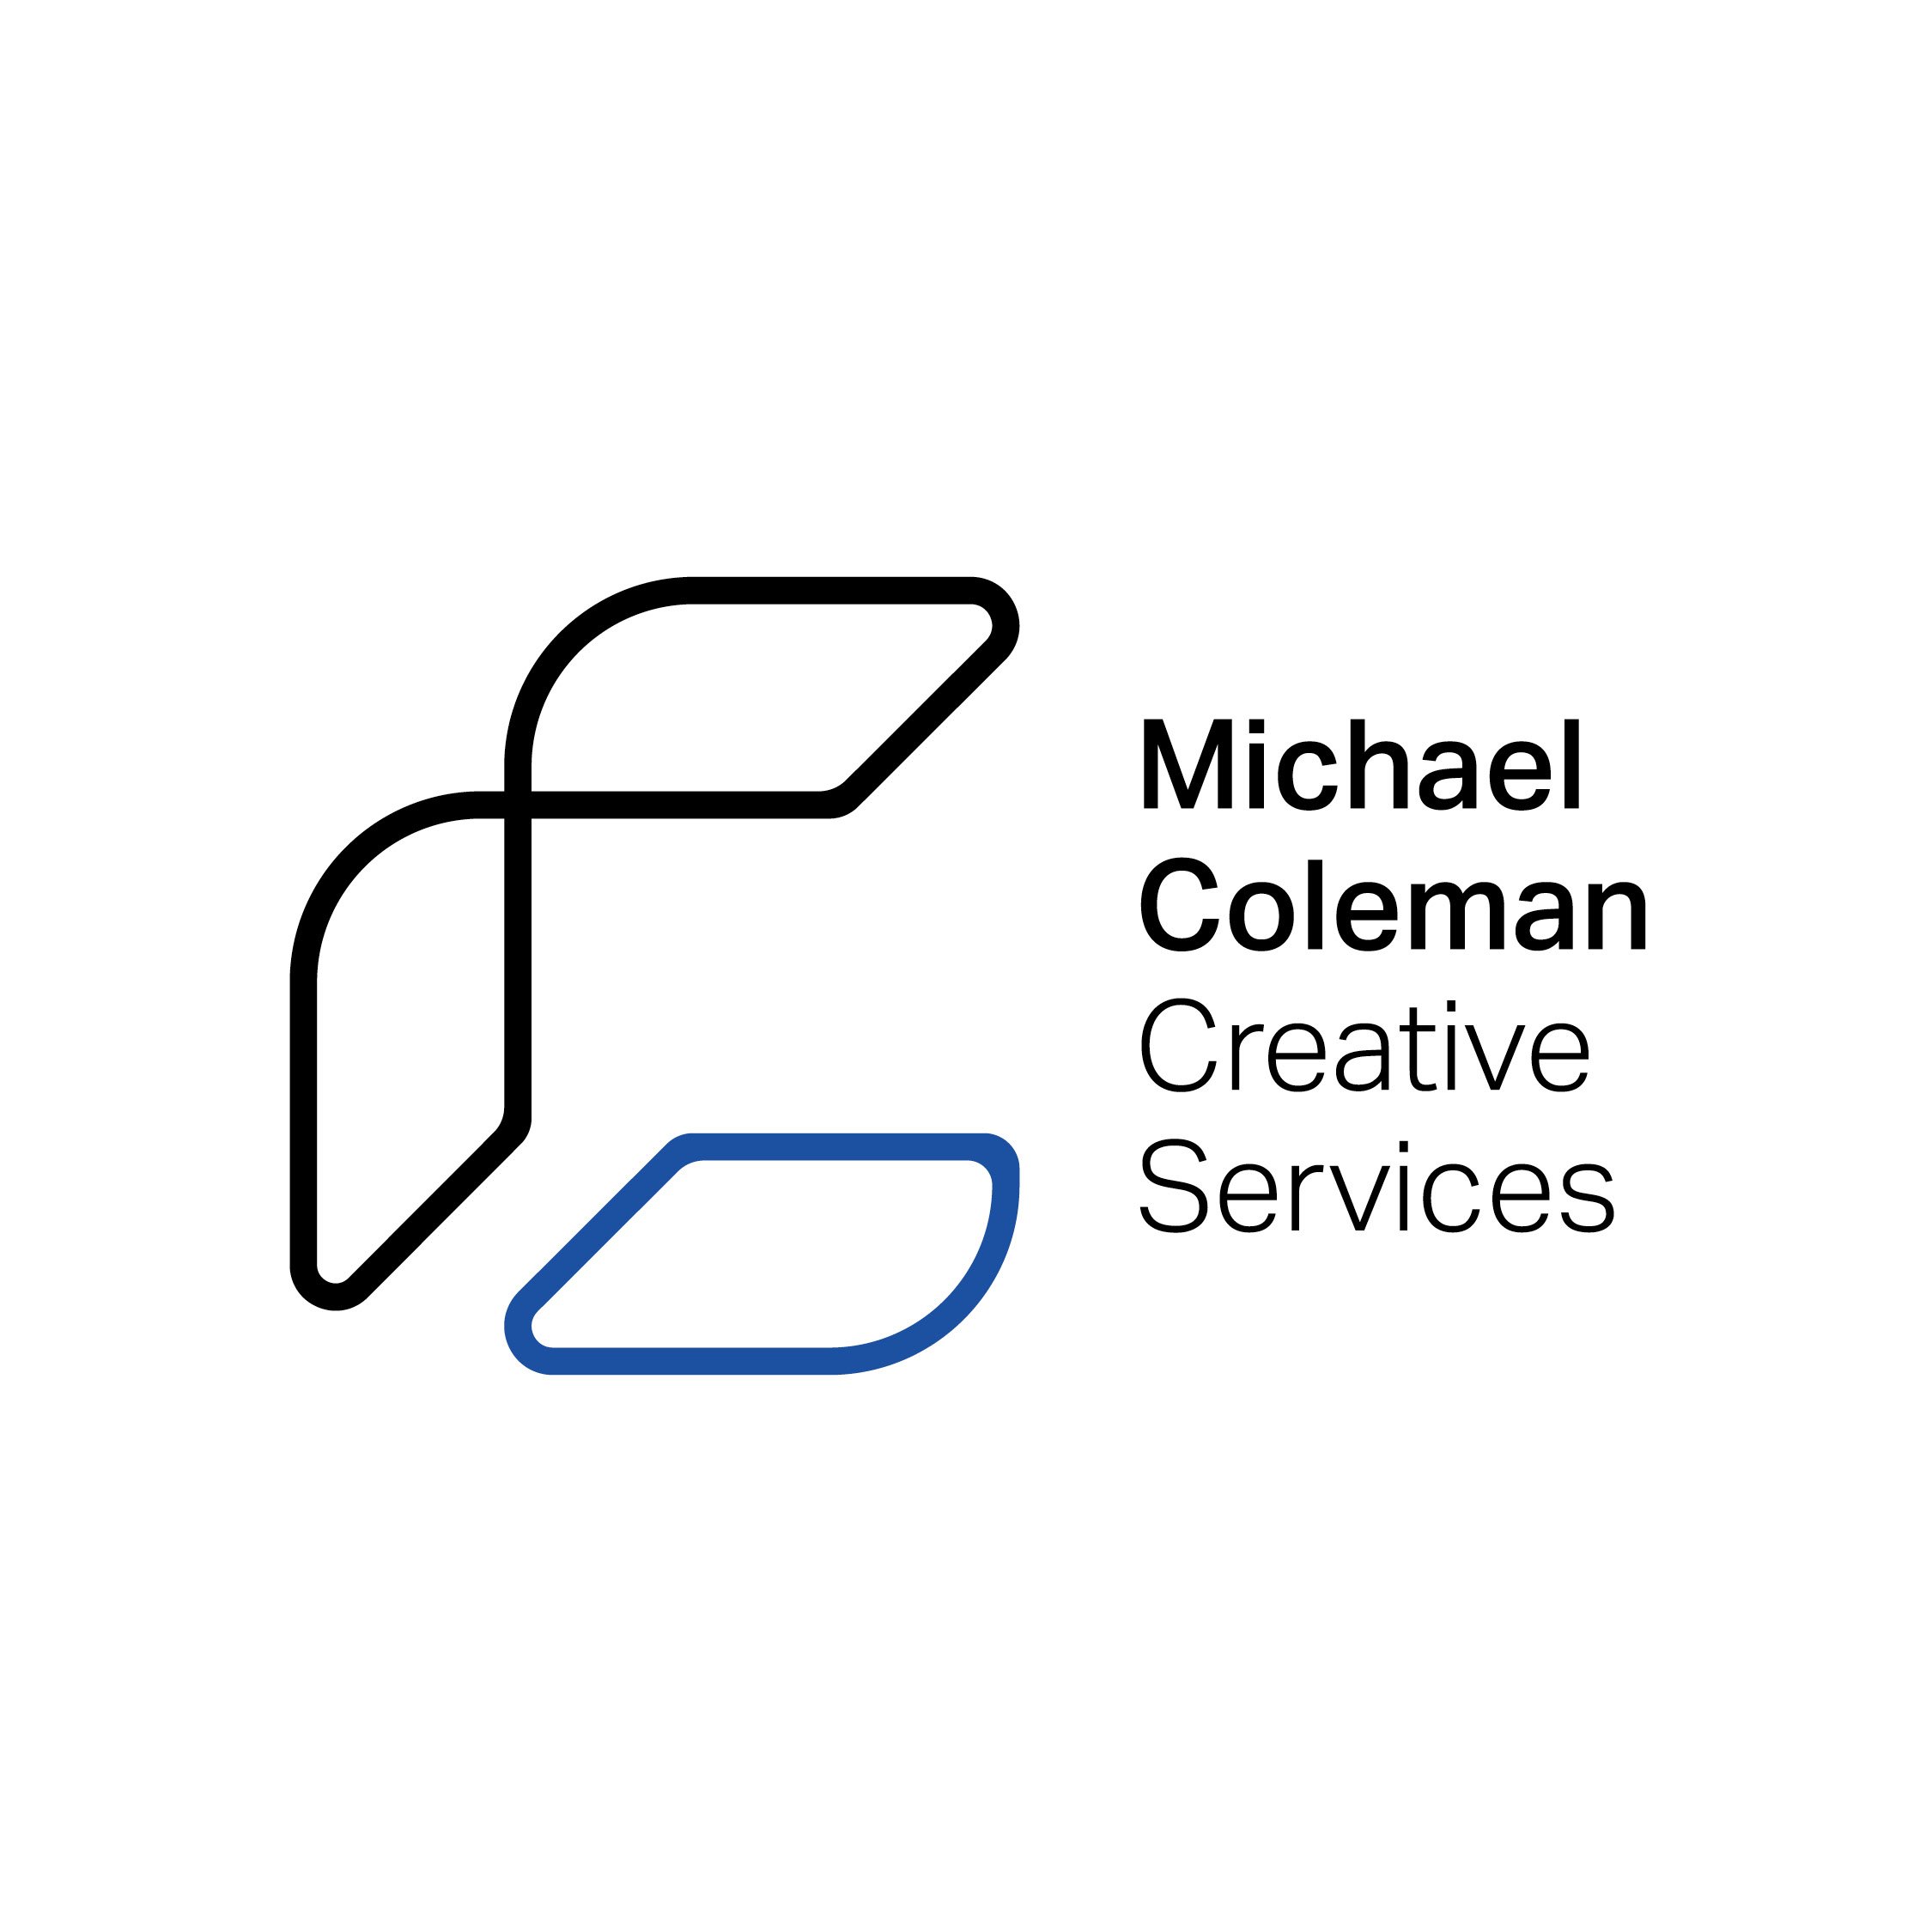 Michael Coleman Creative Services Logo